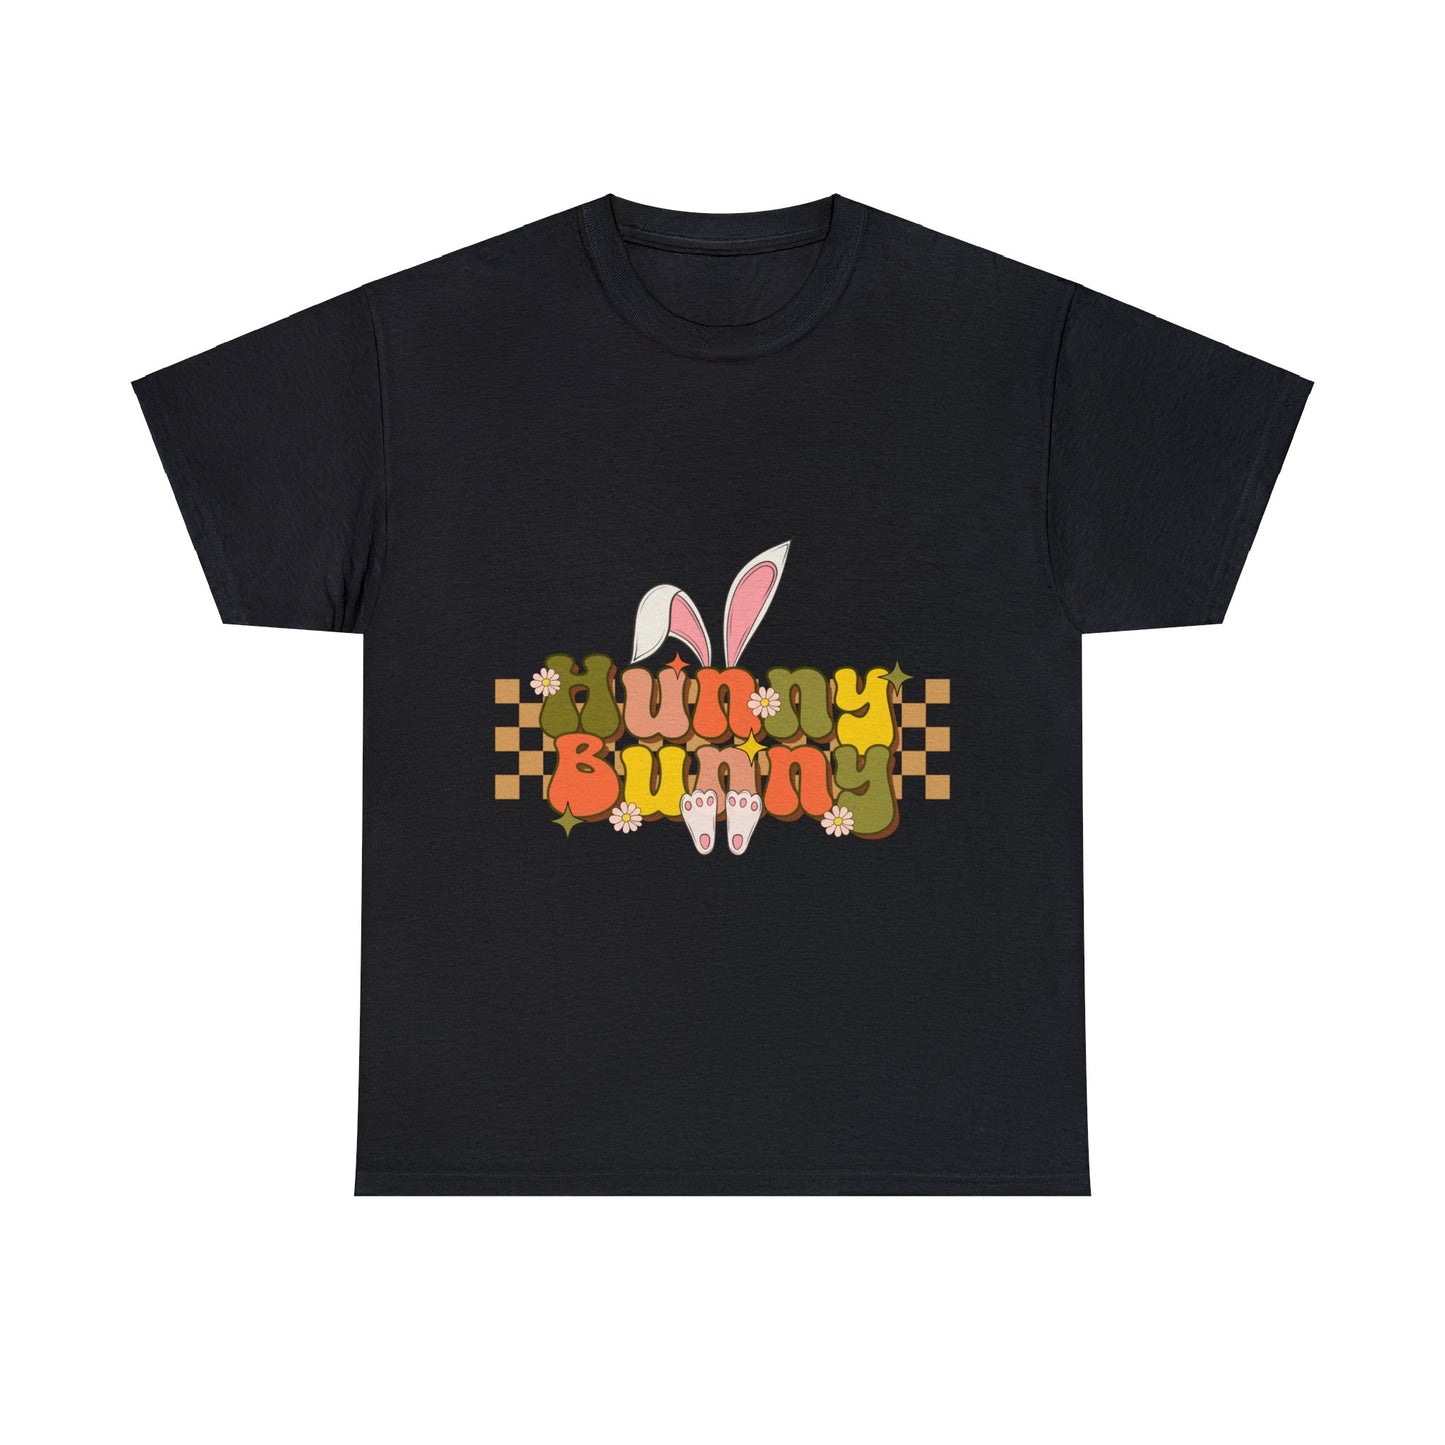 Hunny Bunny - Unisex T-Shirt